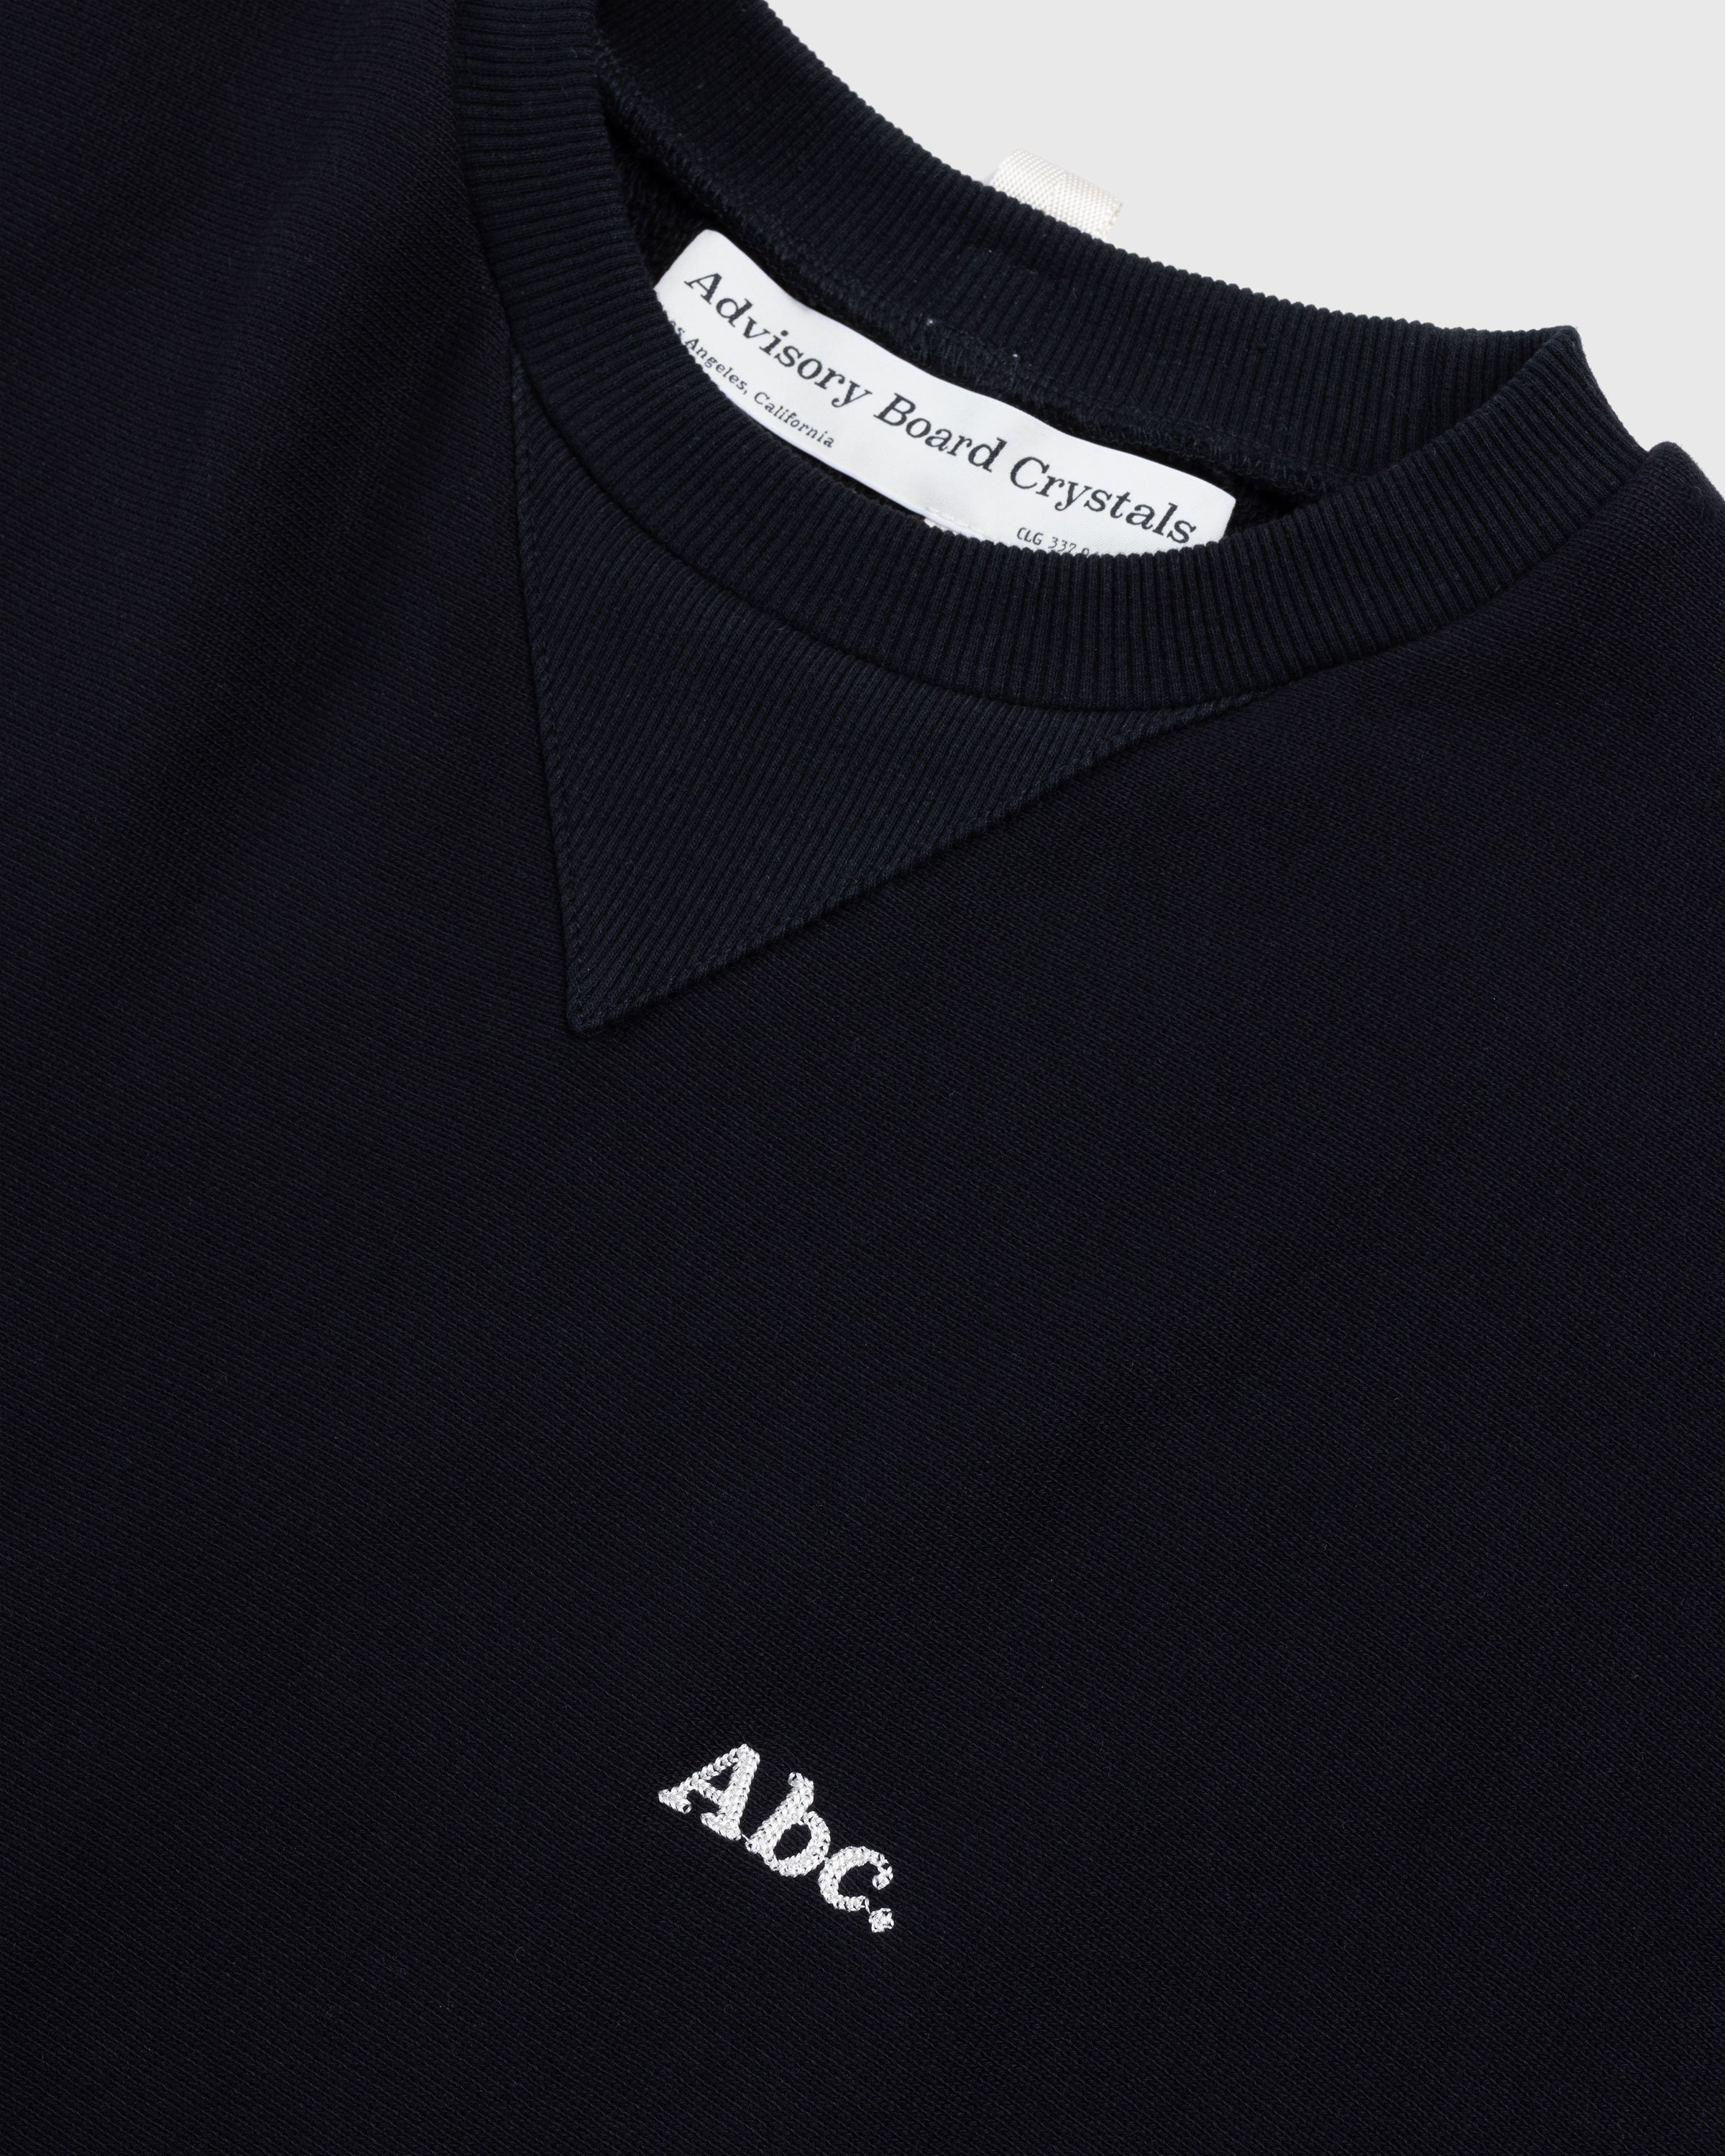 Abc. - Tri-Tone Crewneck Sweatshirt - Clothing - Black - Image 5